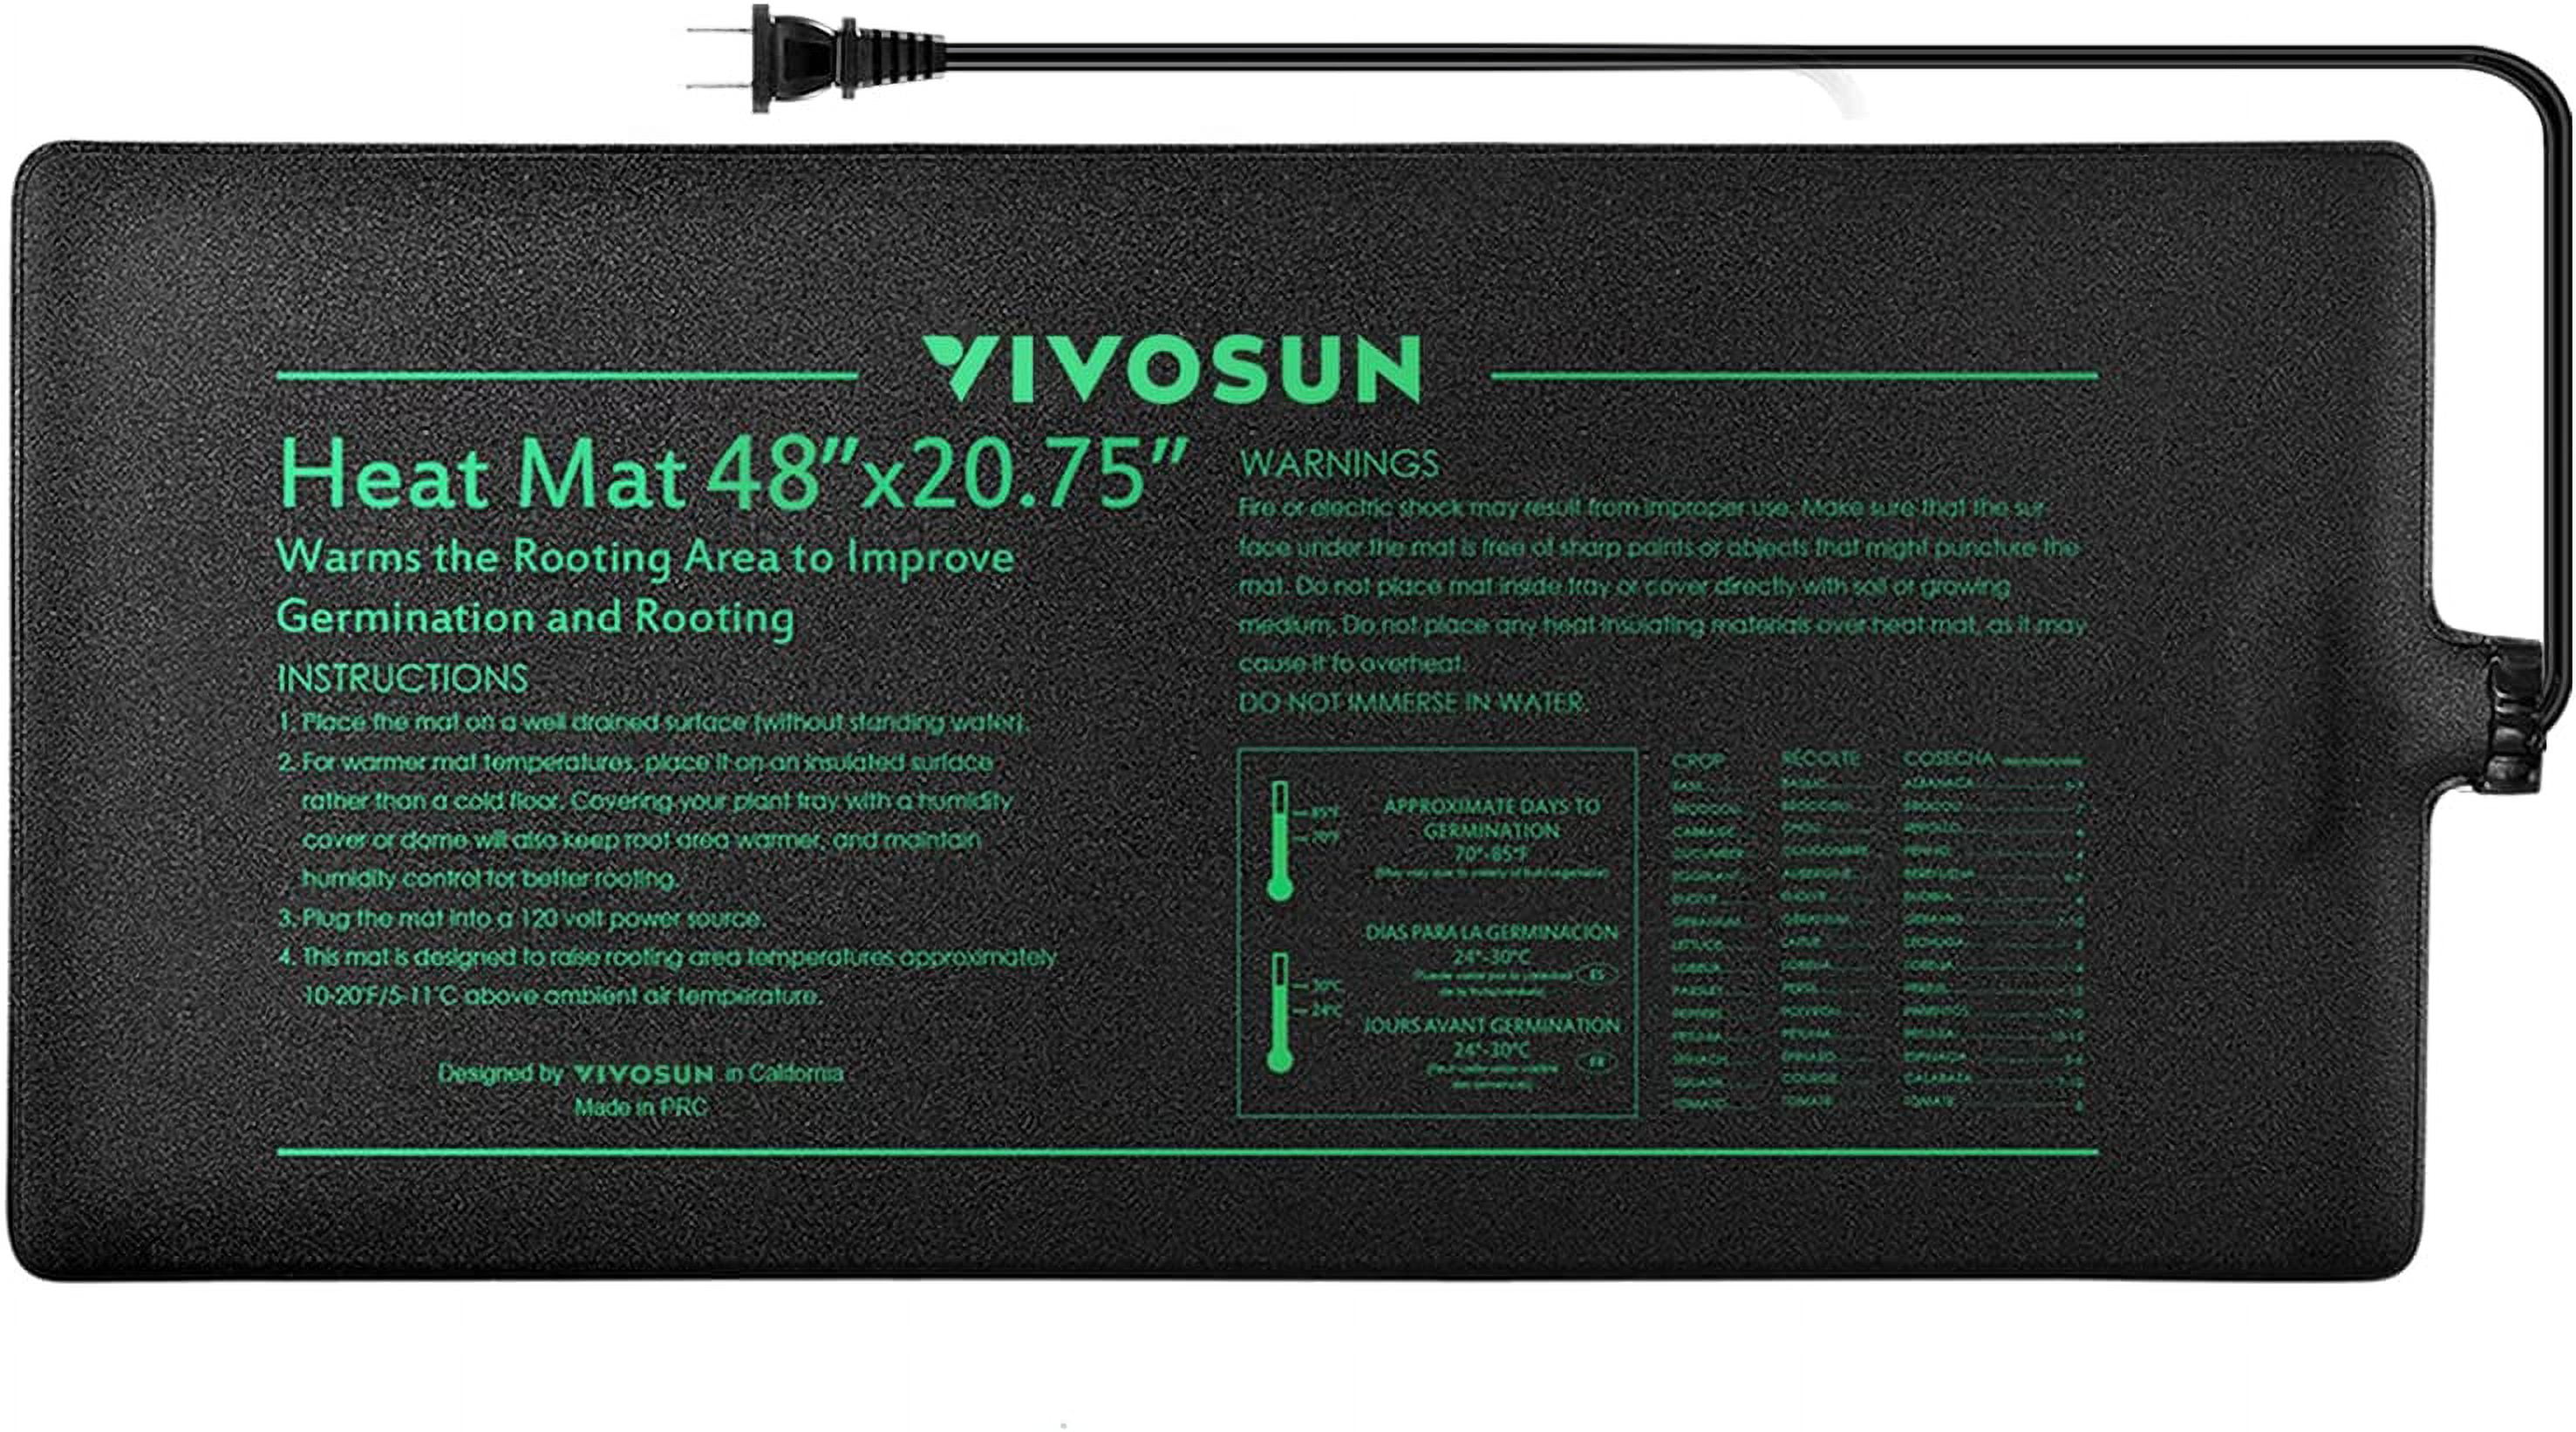  VIVOSUN 10 x 20.75 Durable Waterproof Seedling Heat